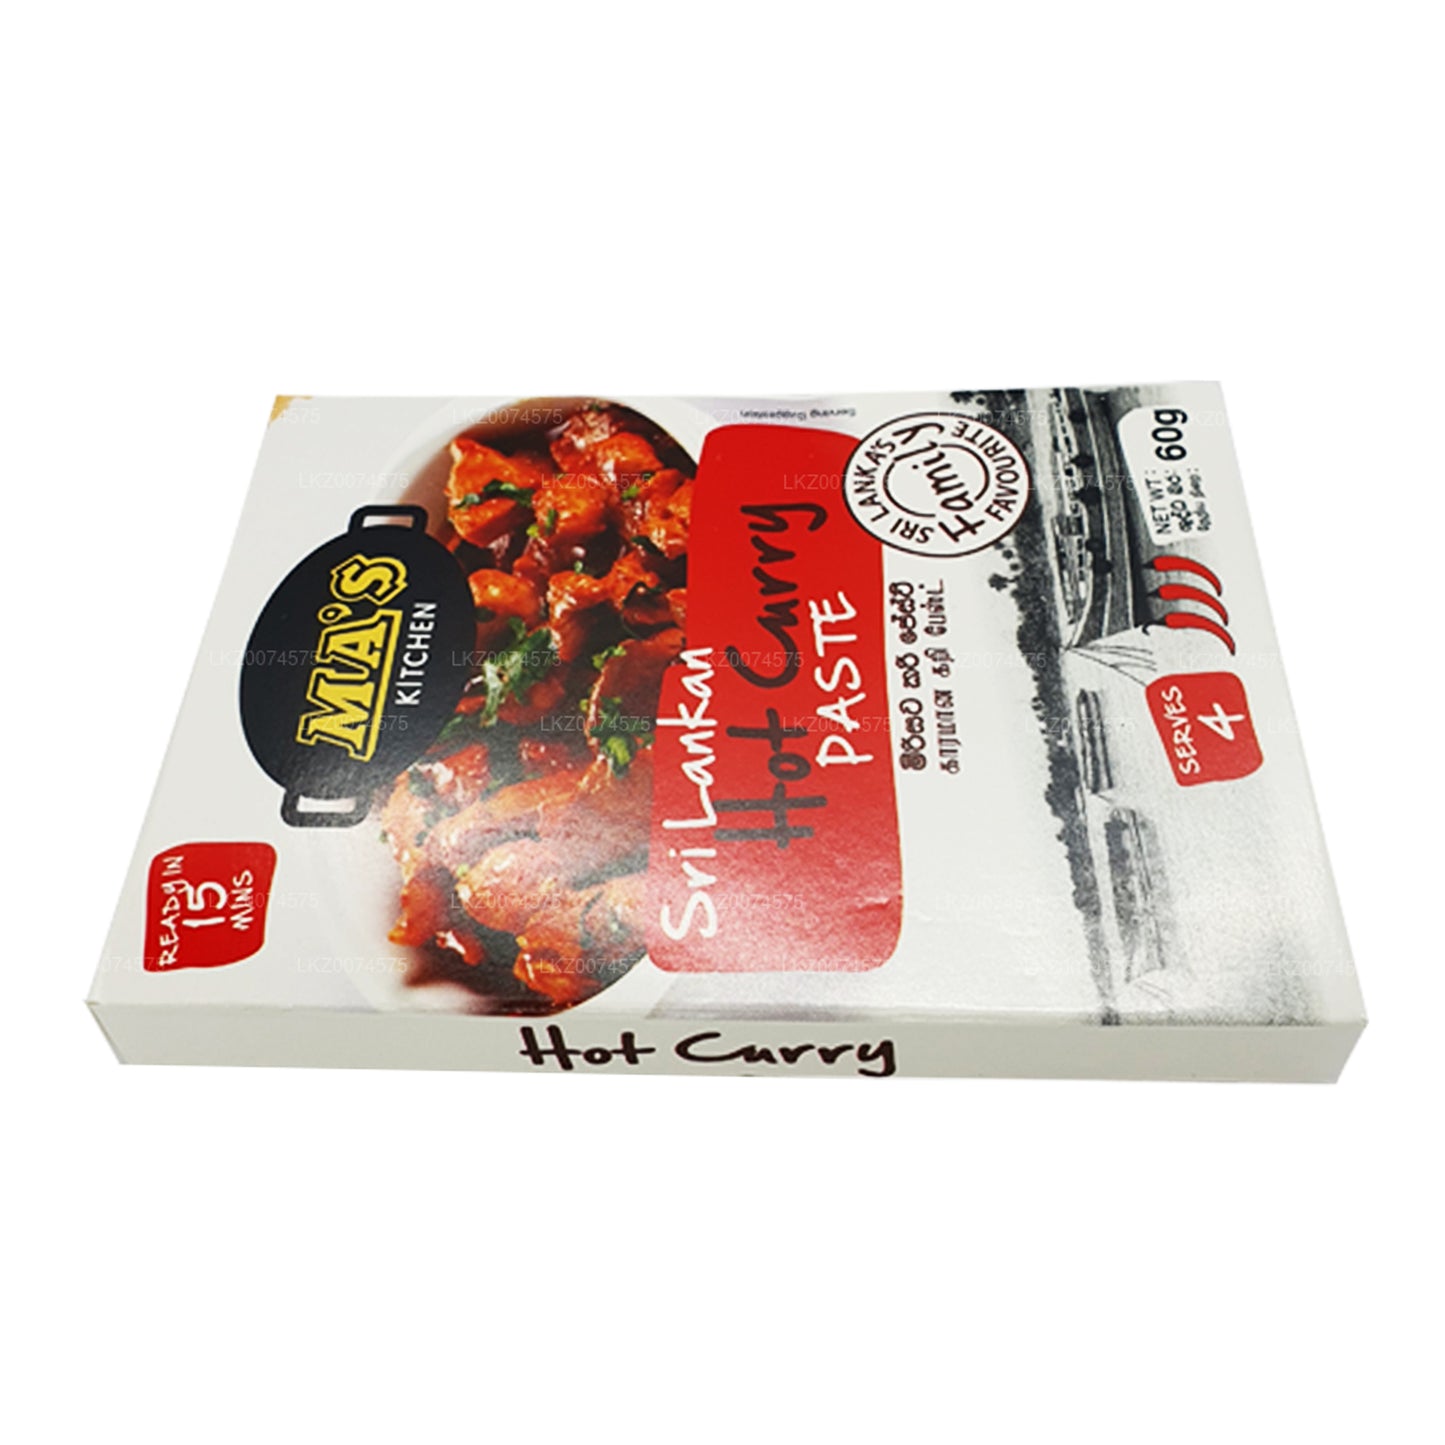 MA's Kitchen Scharfe Currypaste aus Sri Lanka (60 g)